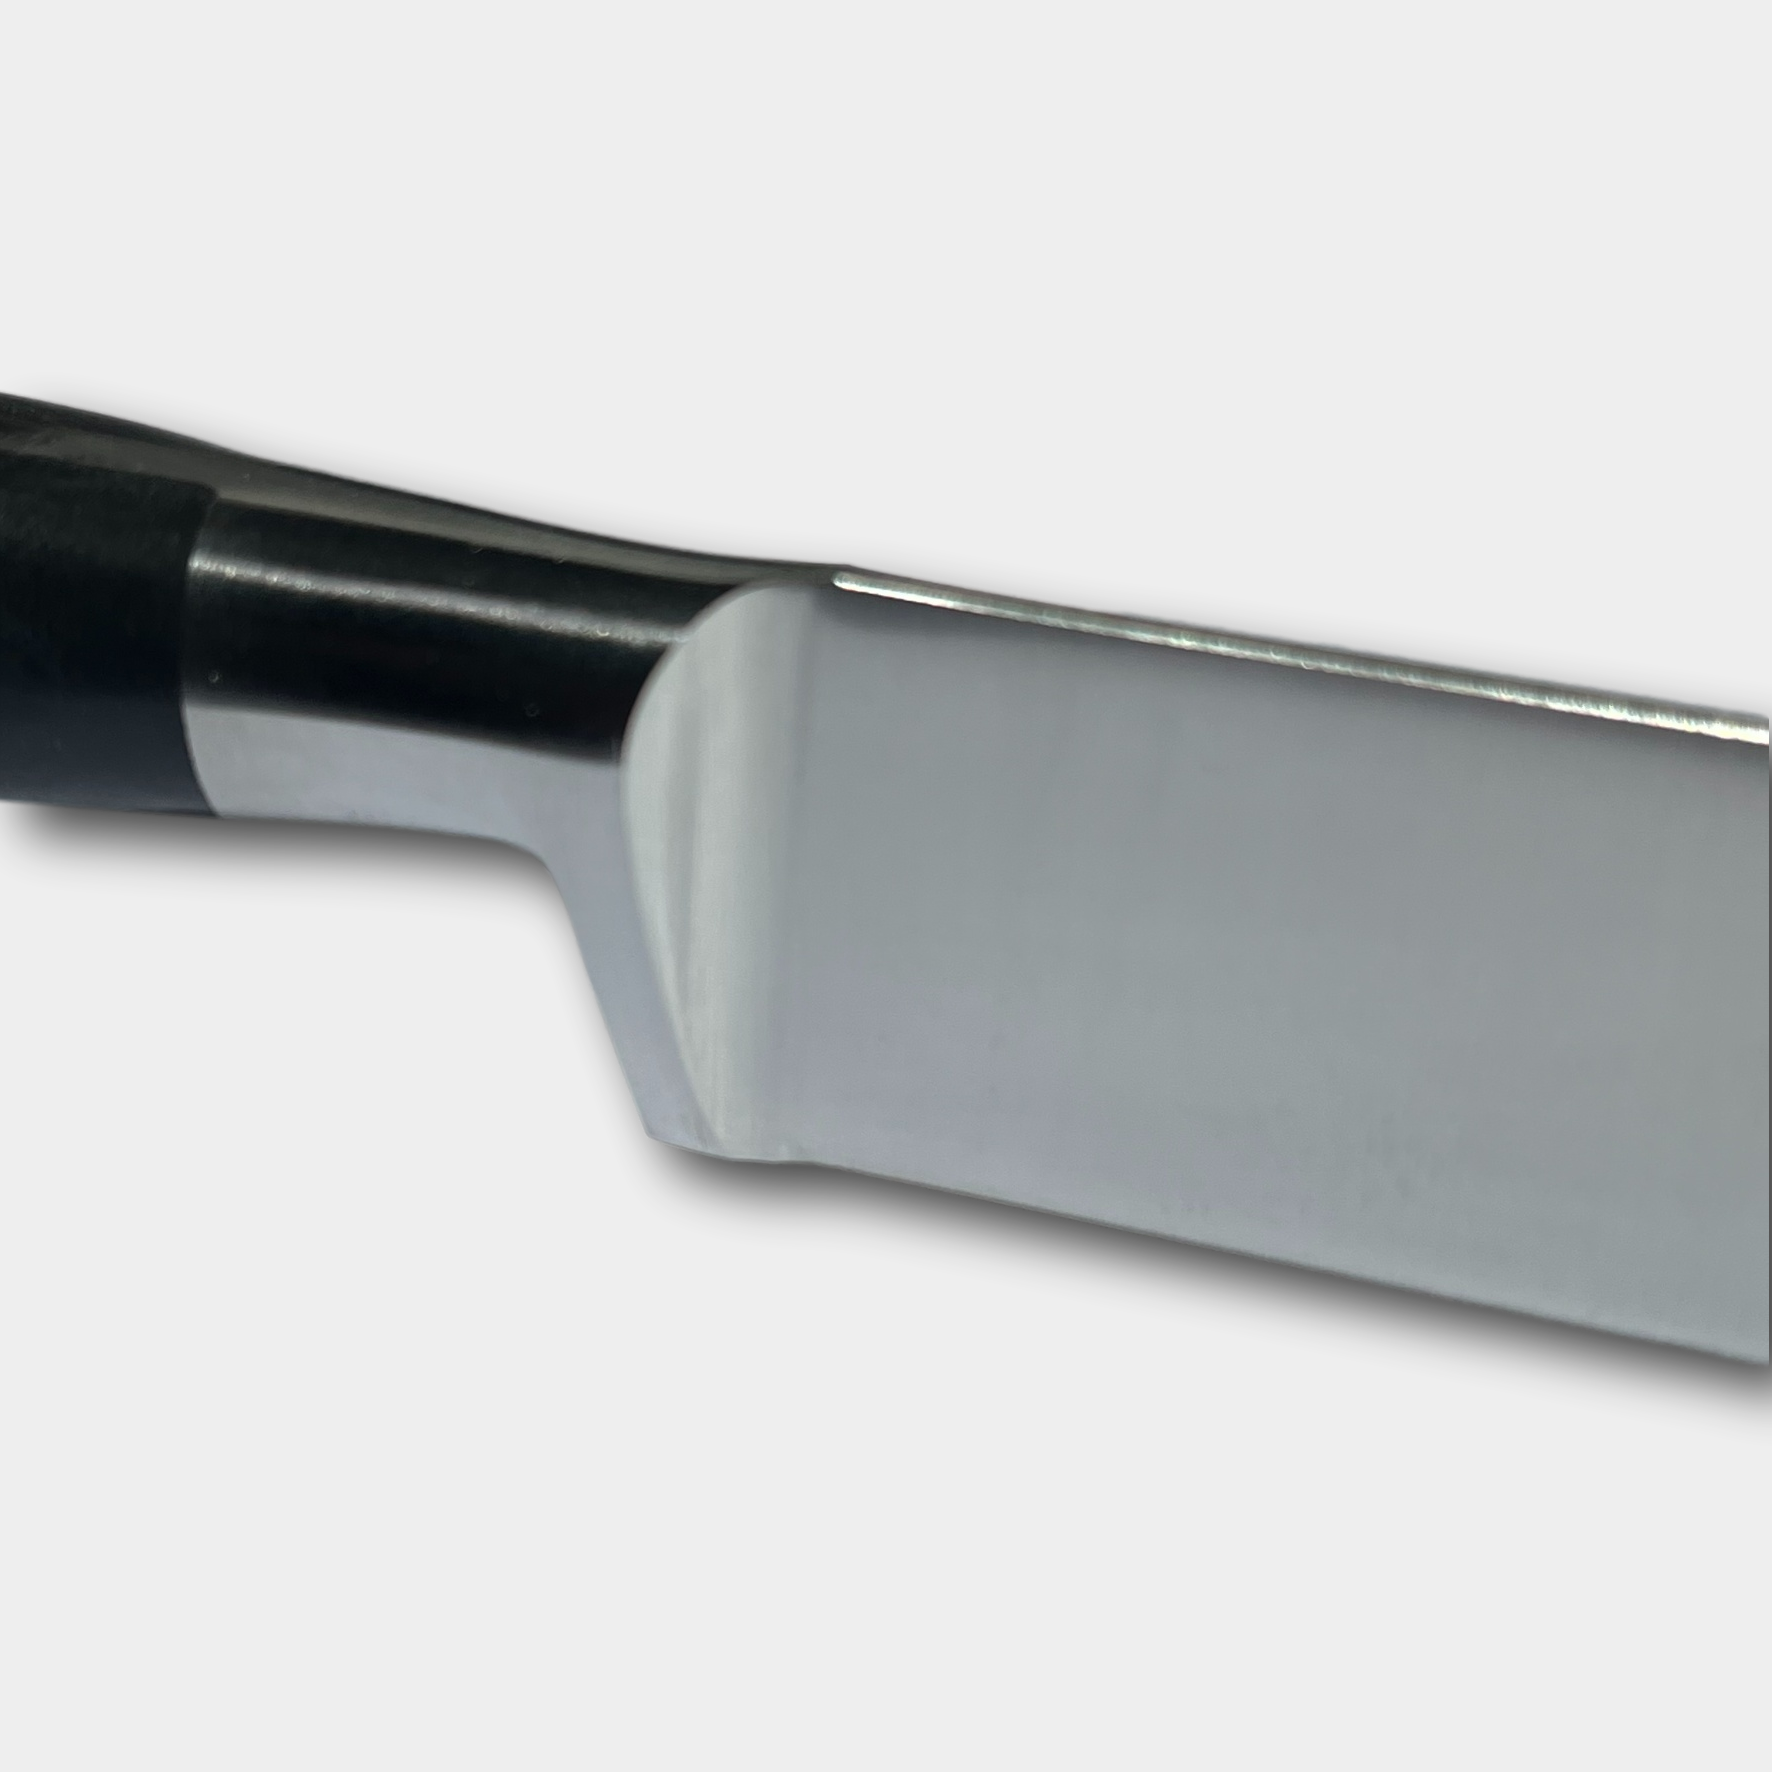 Lion Sabtier Ideal Steel 3 Piece Set - Paring/Utility/Chef Knives